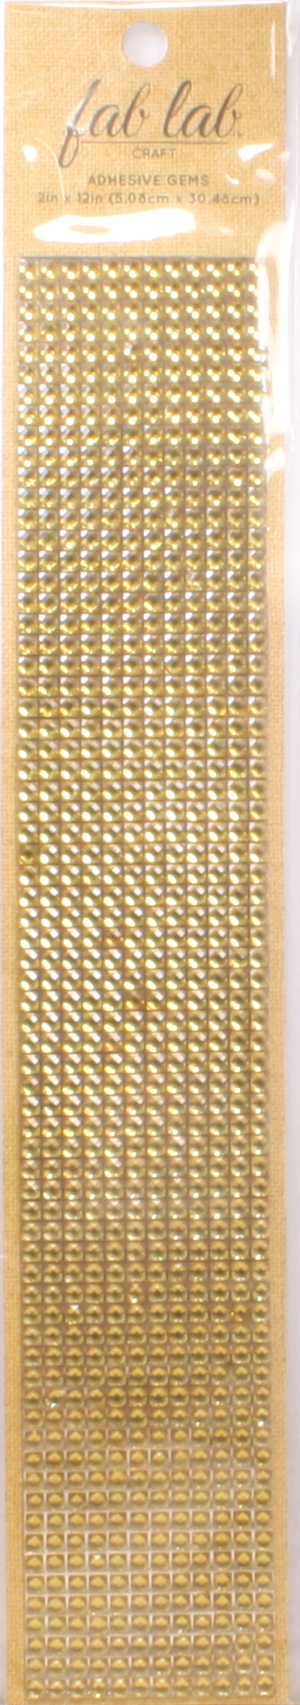 4mm Gold Adhesive Gems